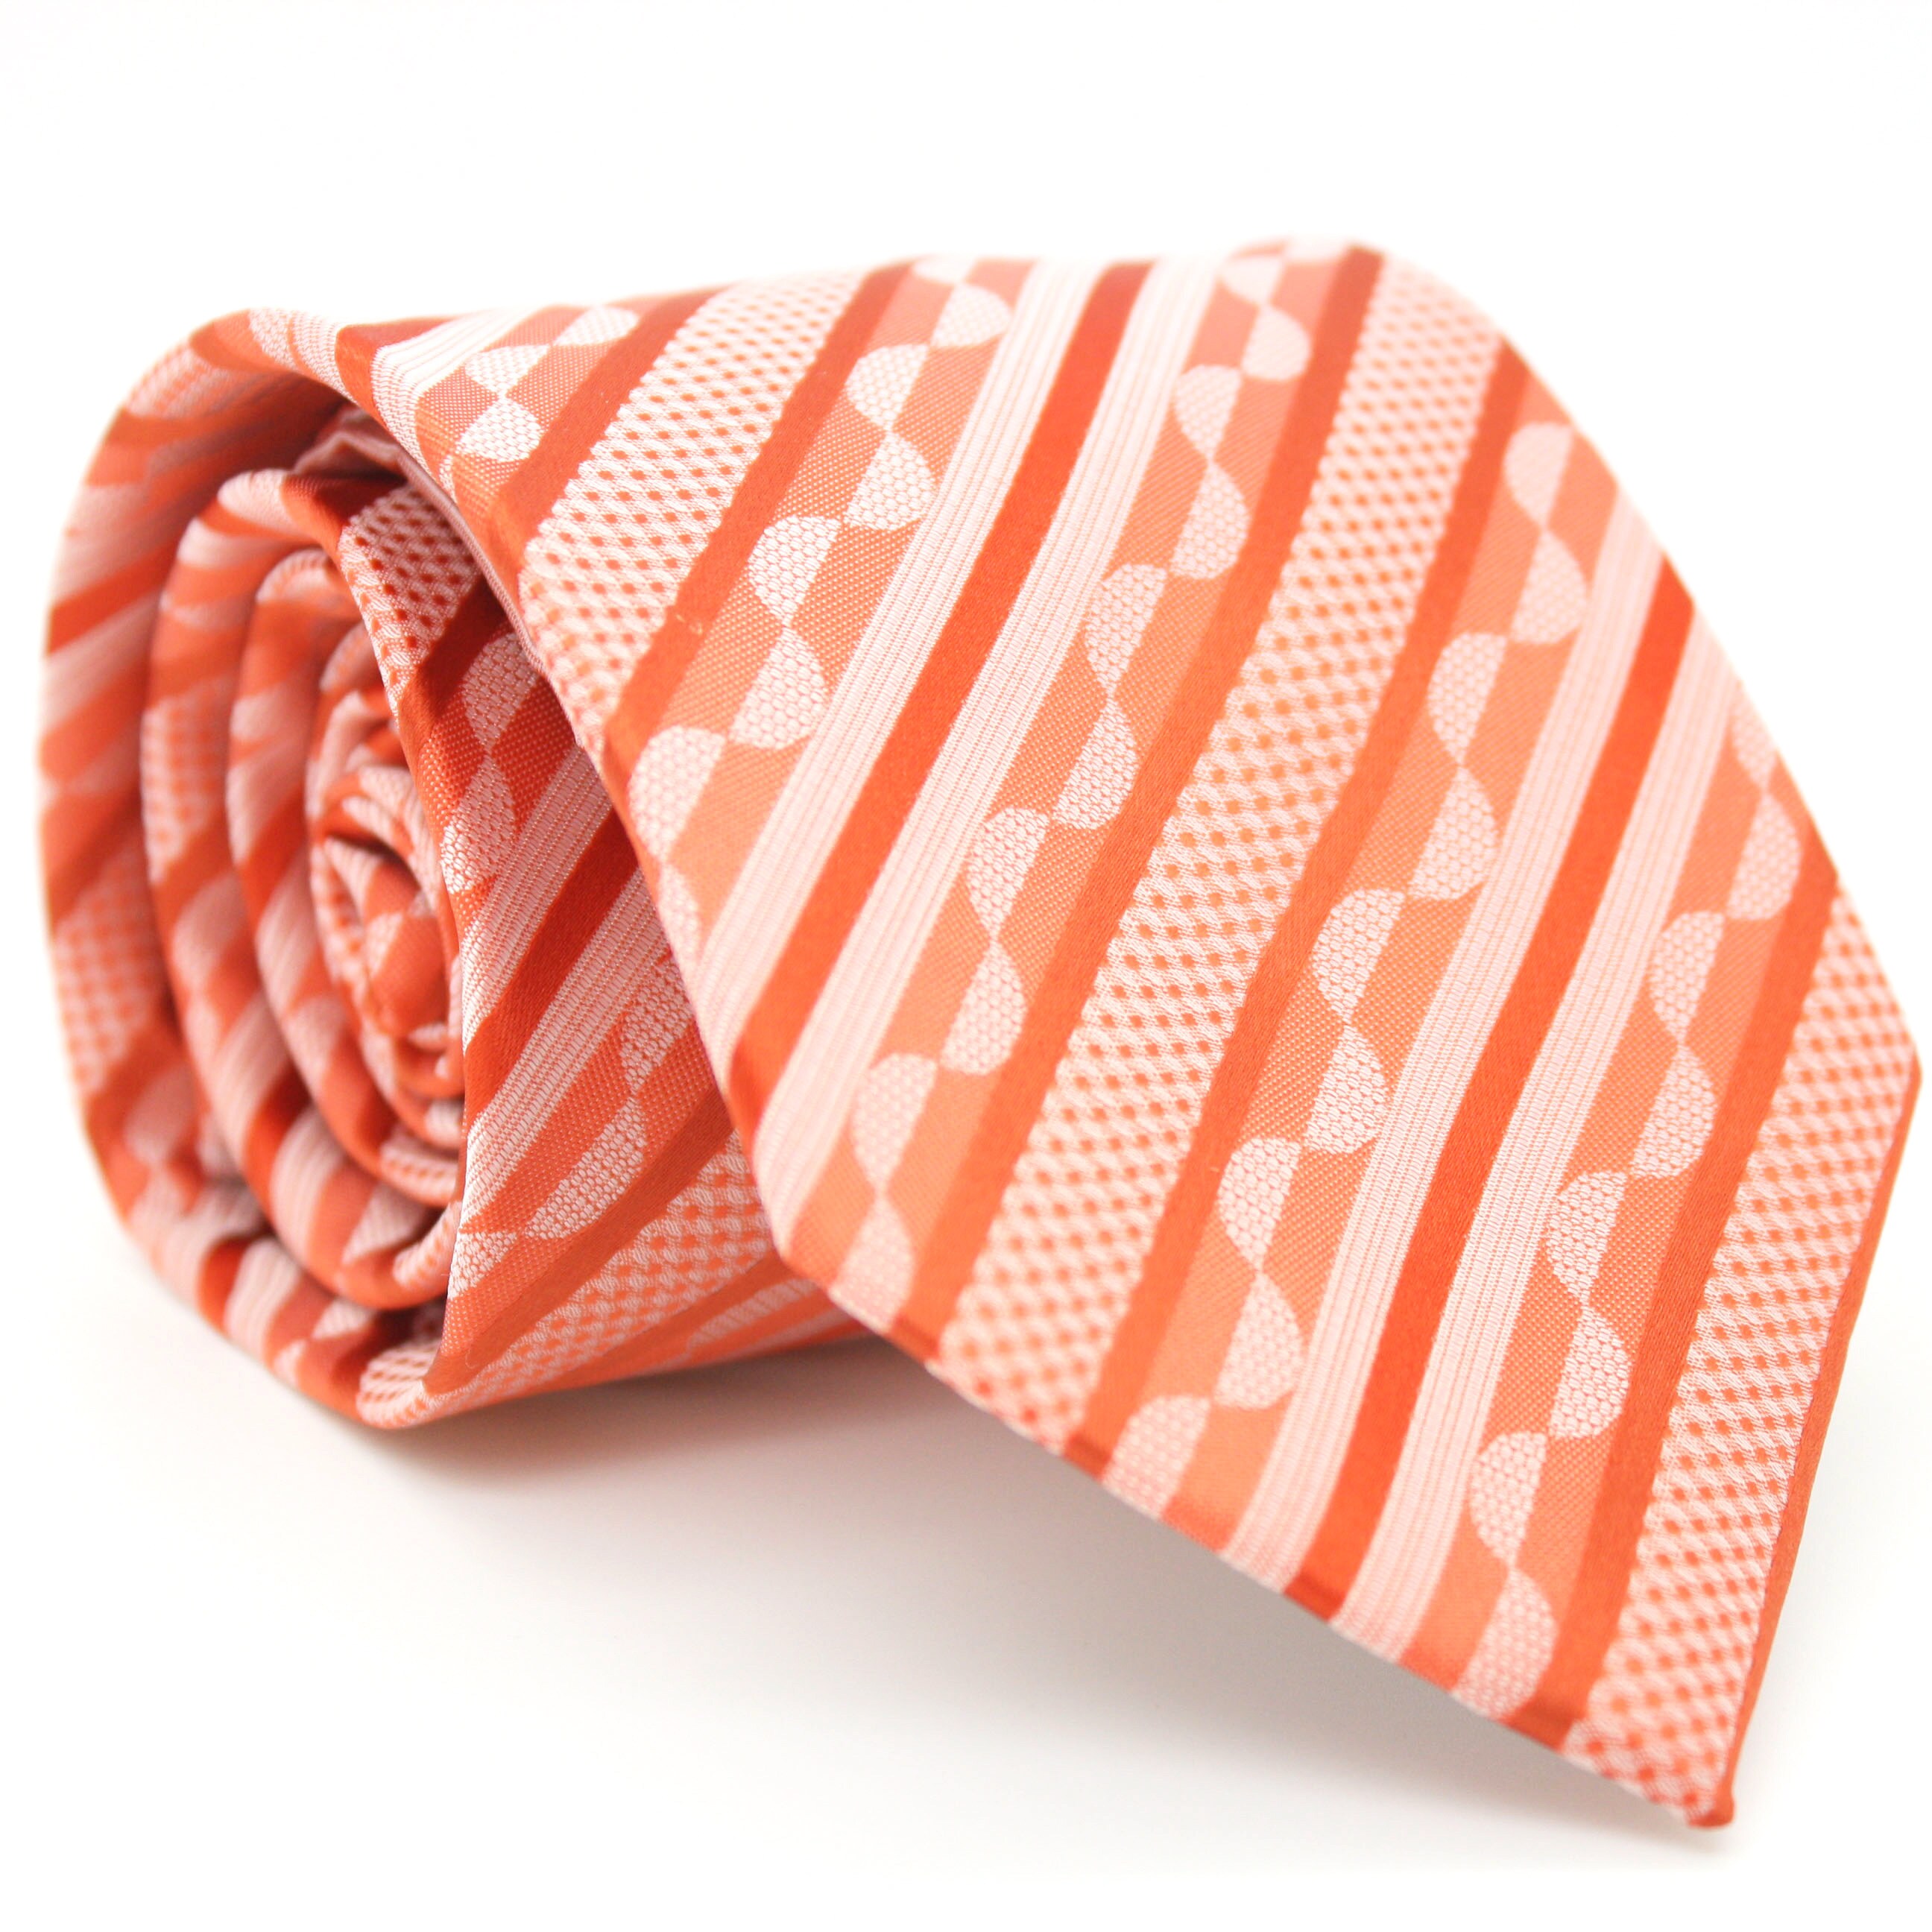 Ferrecci Slim Classic Orange Striped Necktie With Matching Handkerchief   Tie Set